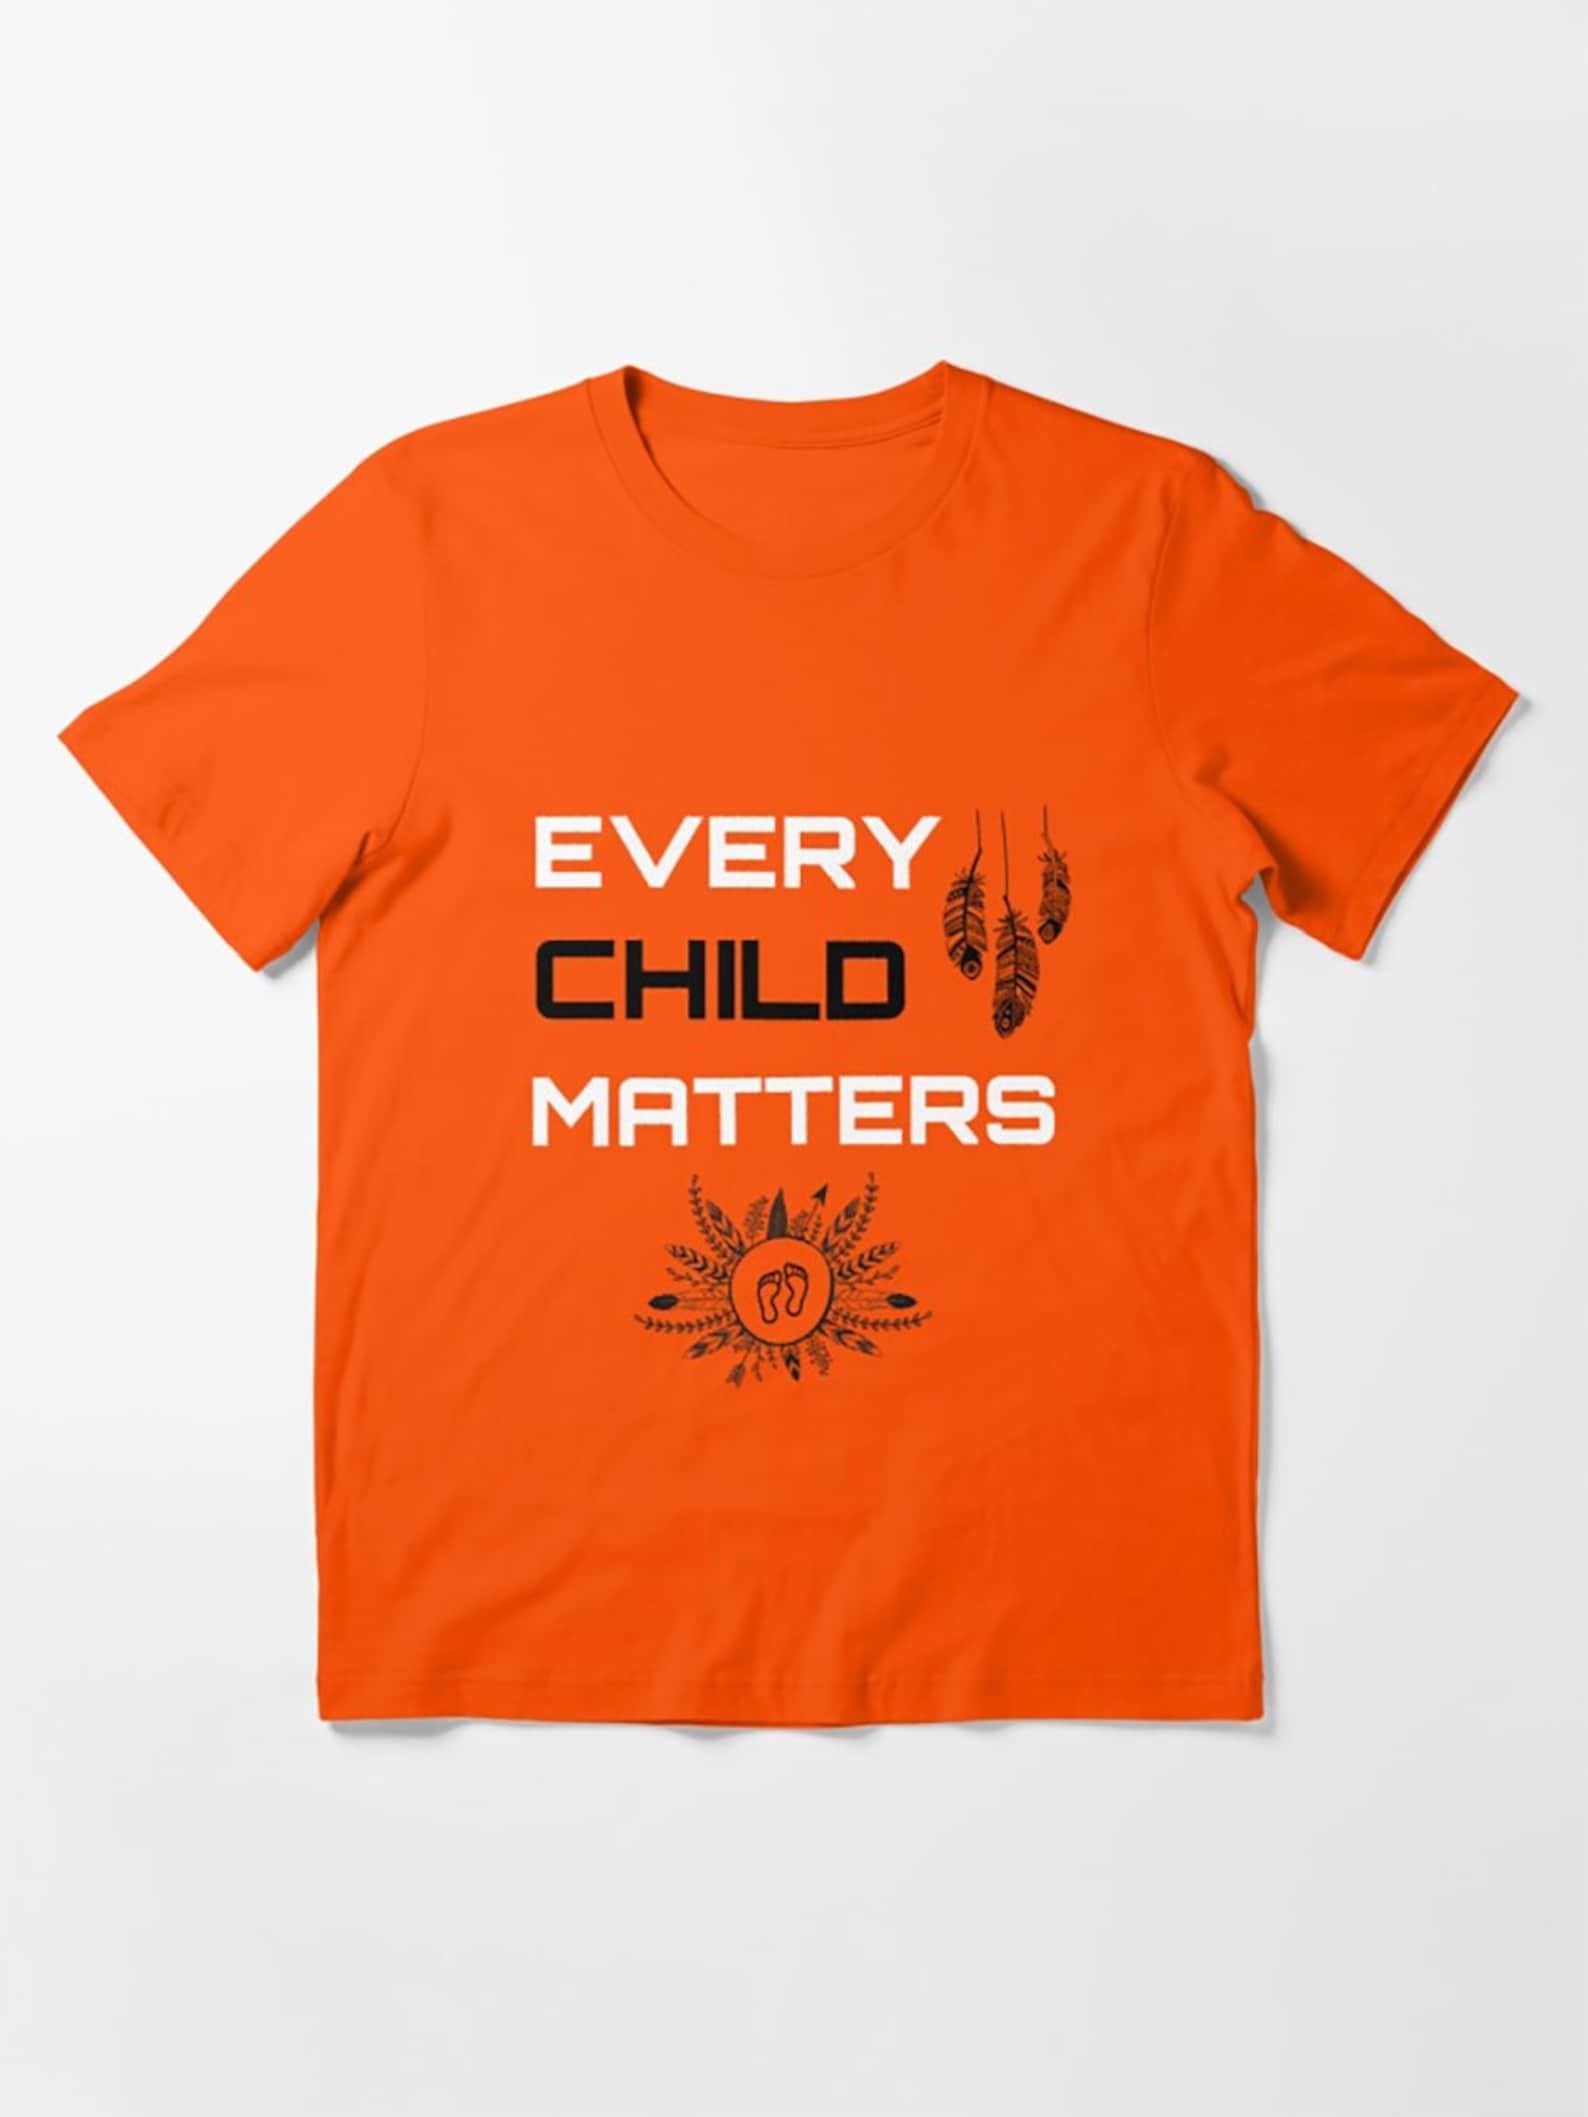 Every Child Matters Shirt Canada Orange Shirt Day Child | Etsy